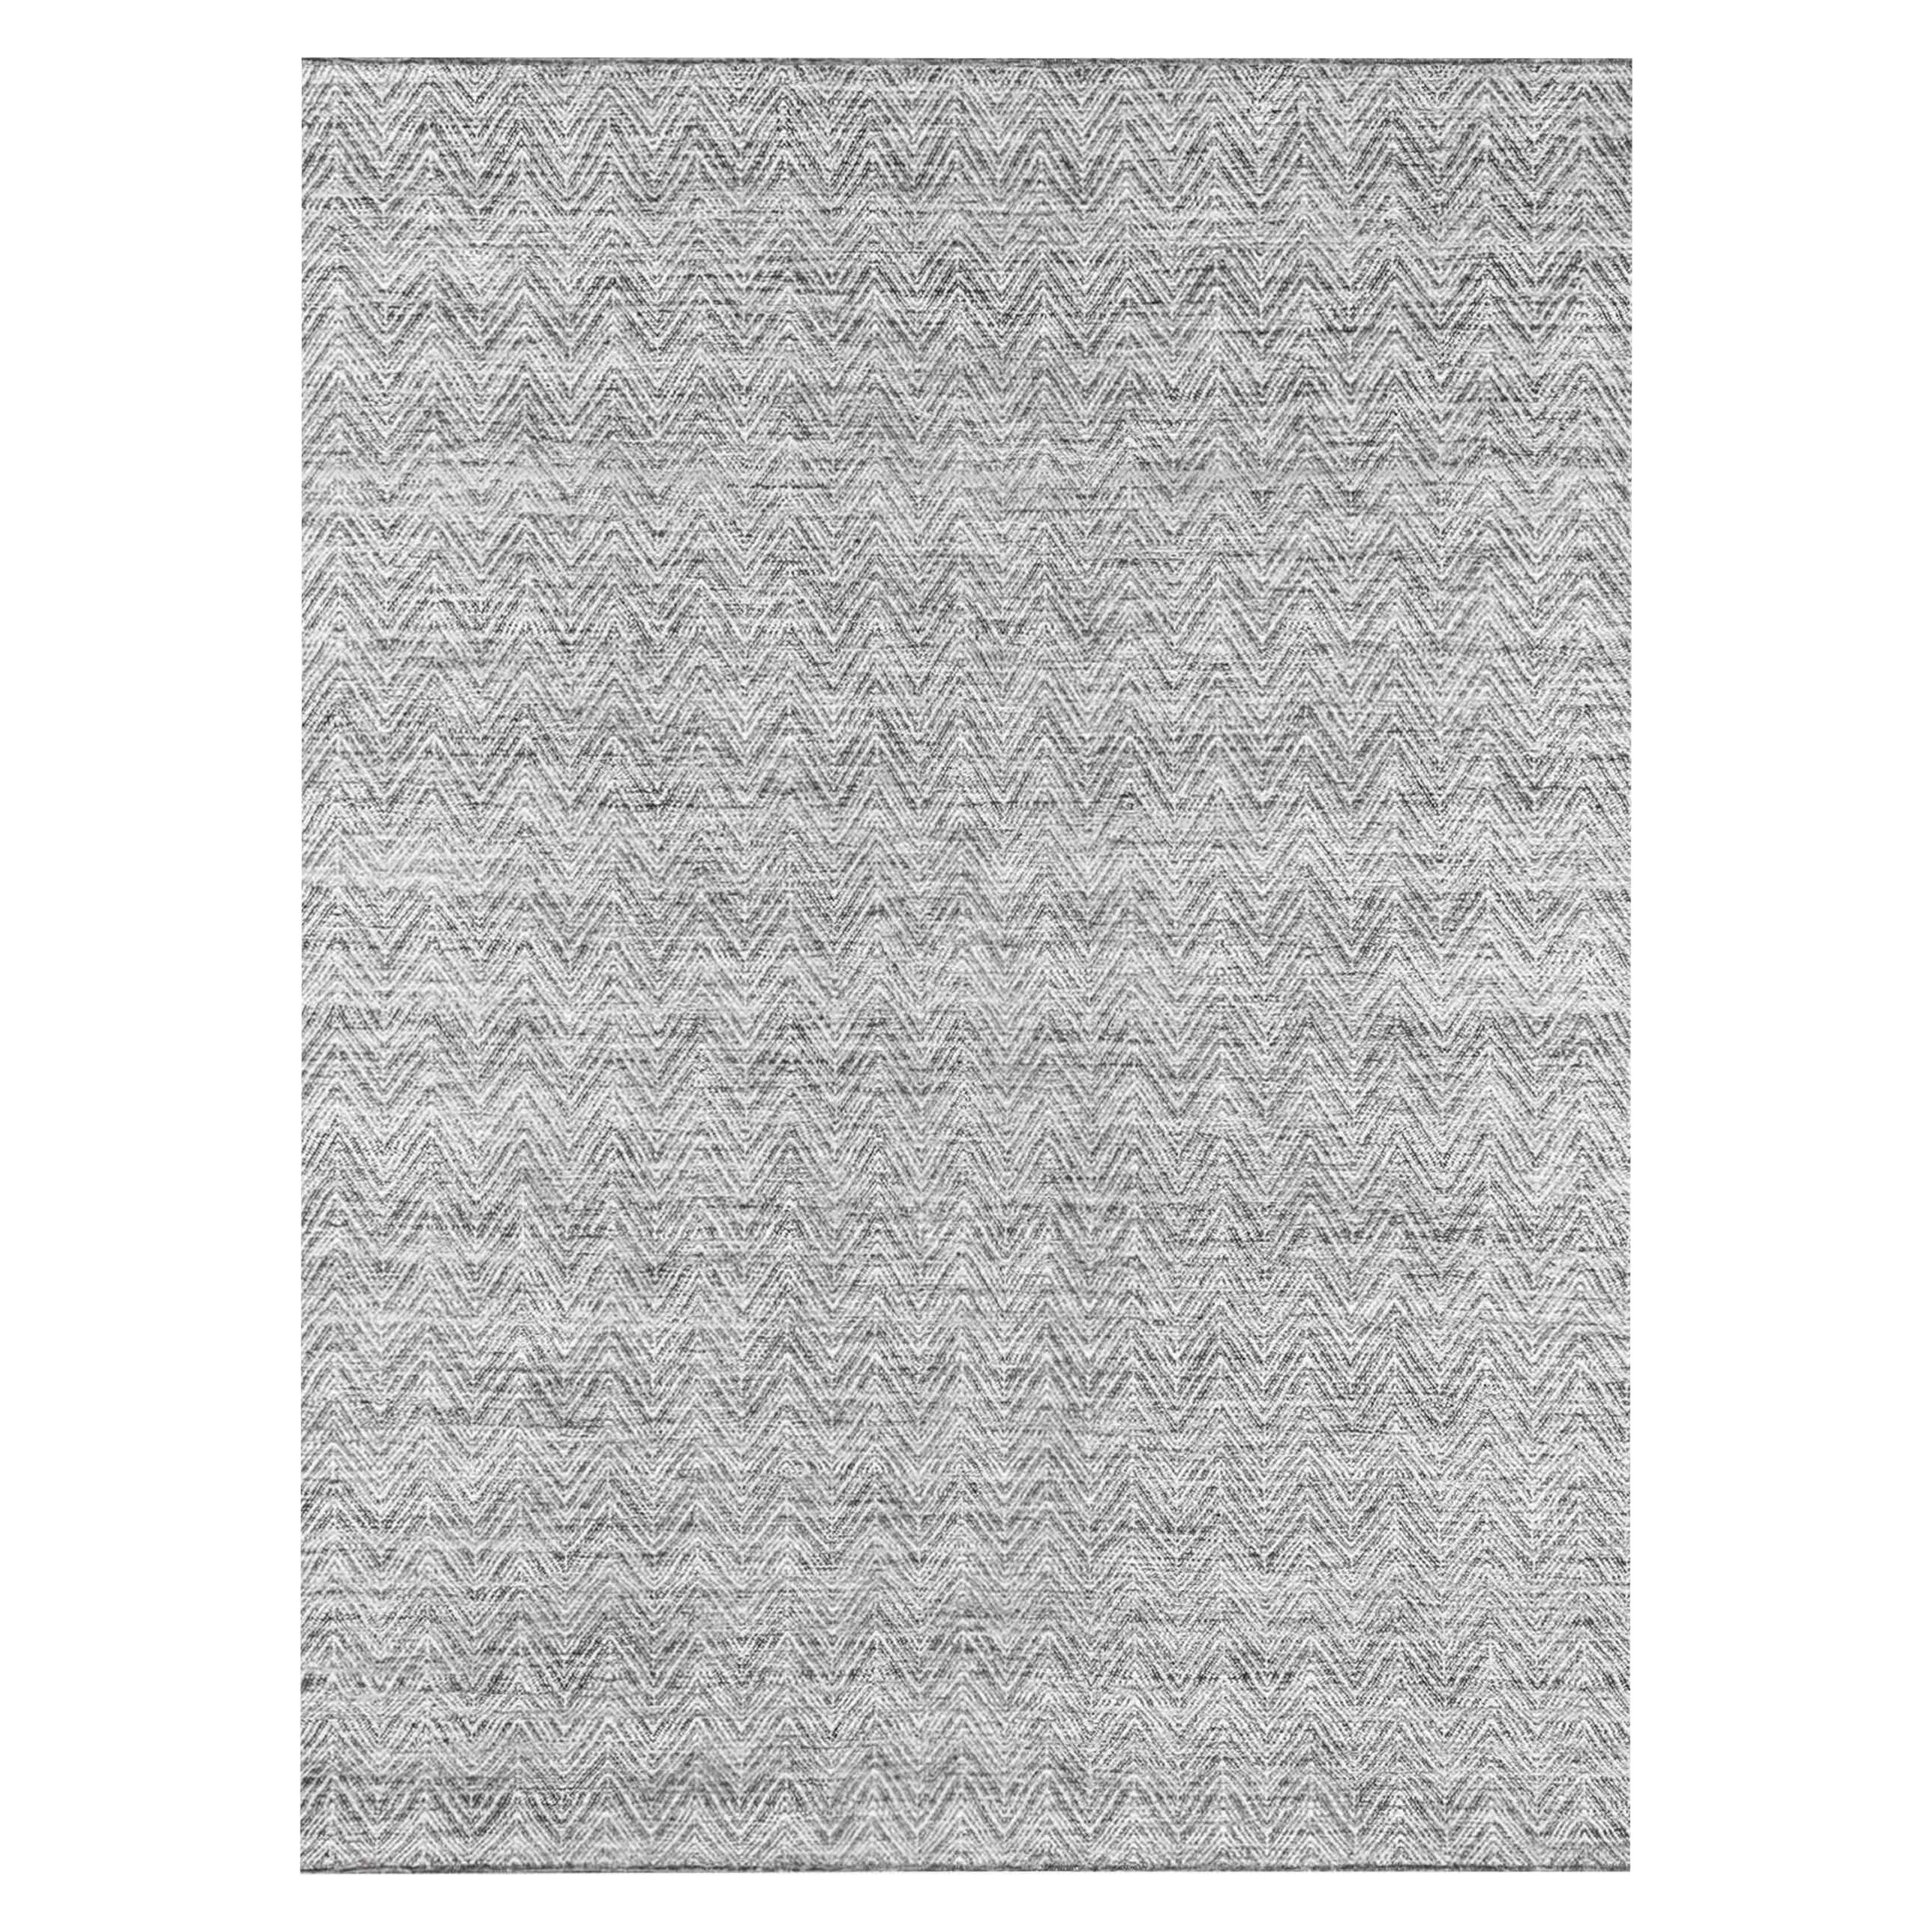 For Sale: Black (Charcoal) Ben Soleimani Ceyah Rug– Hand-woven Plush Textured Wool + Linen Charcoal 12'x15'